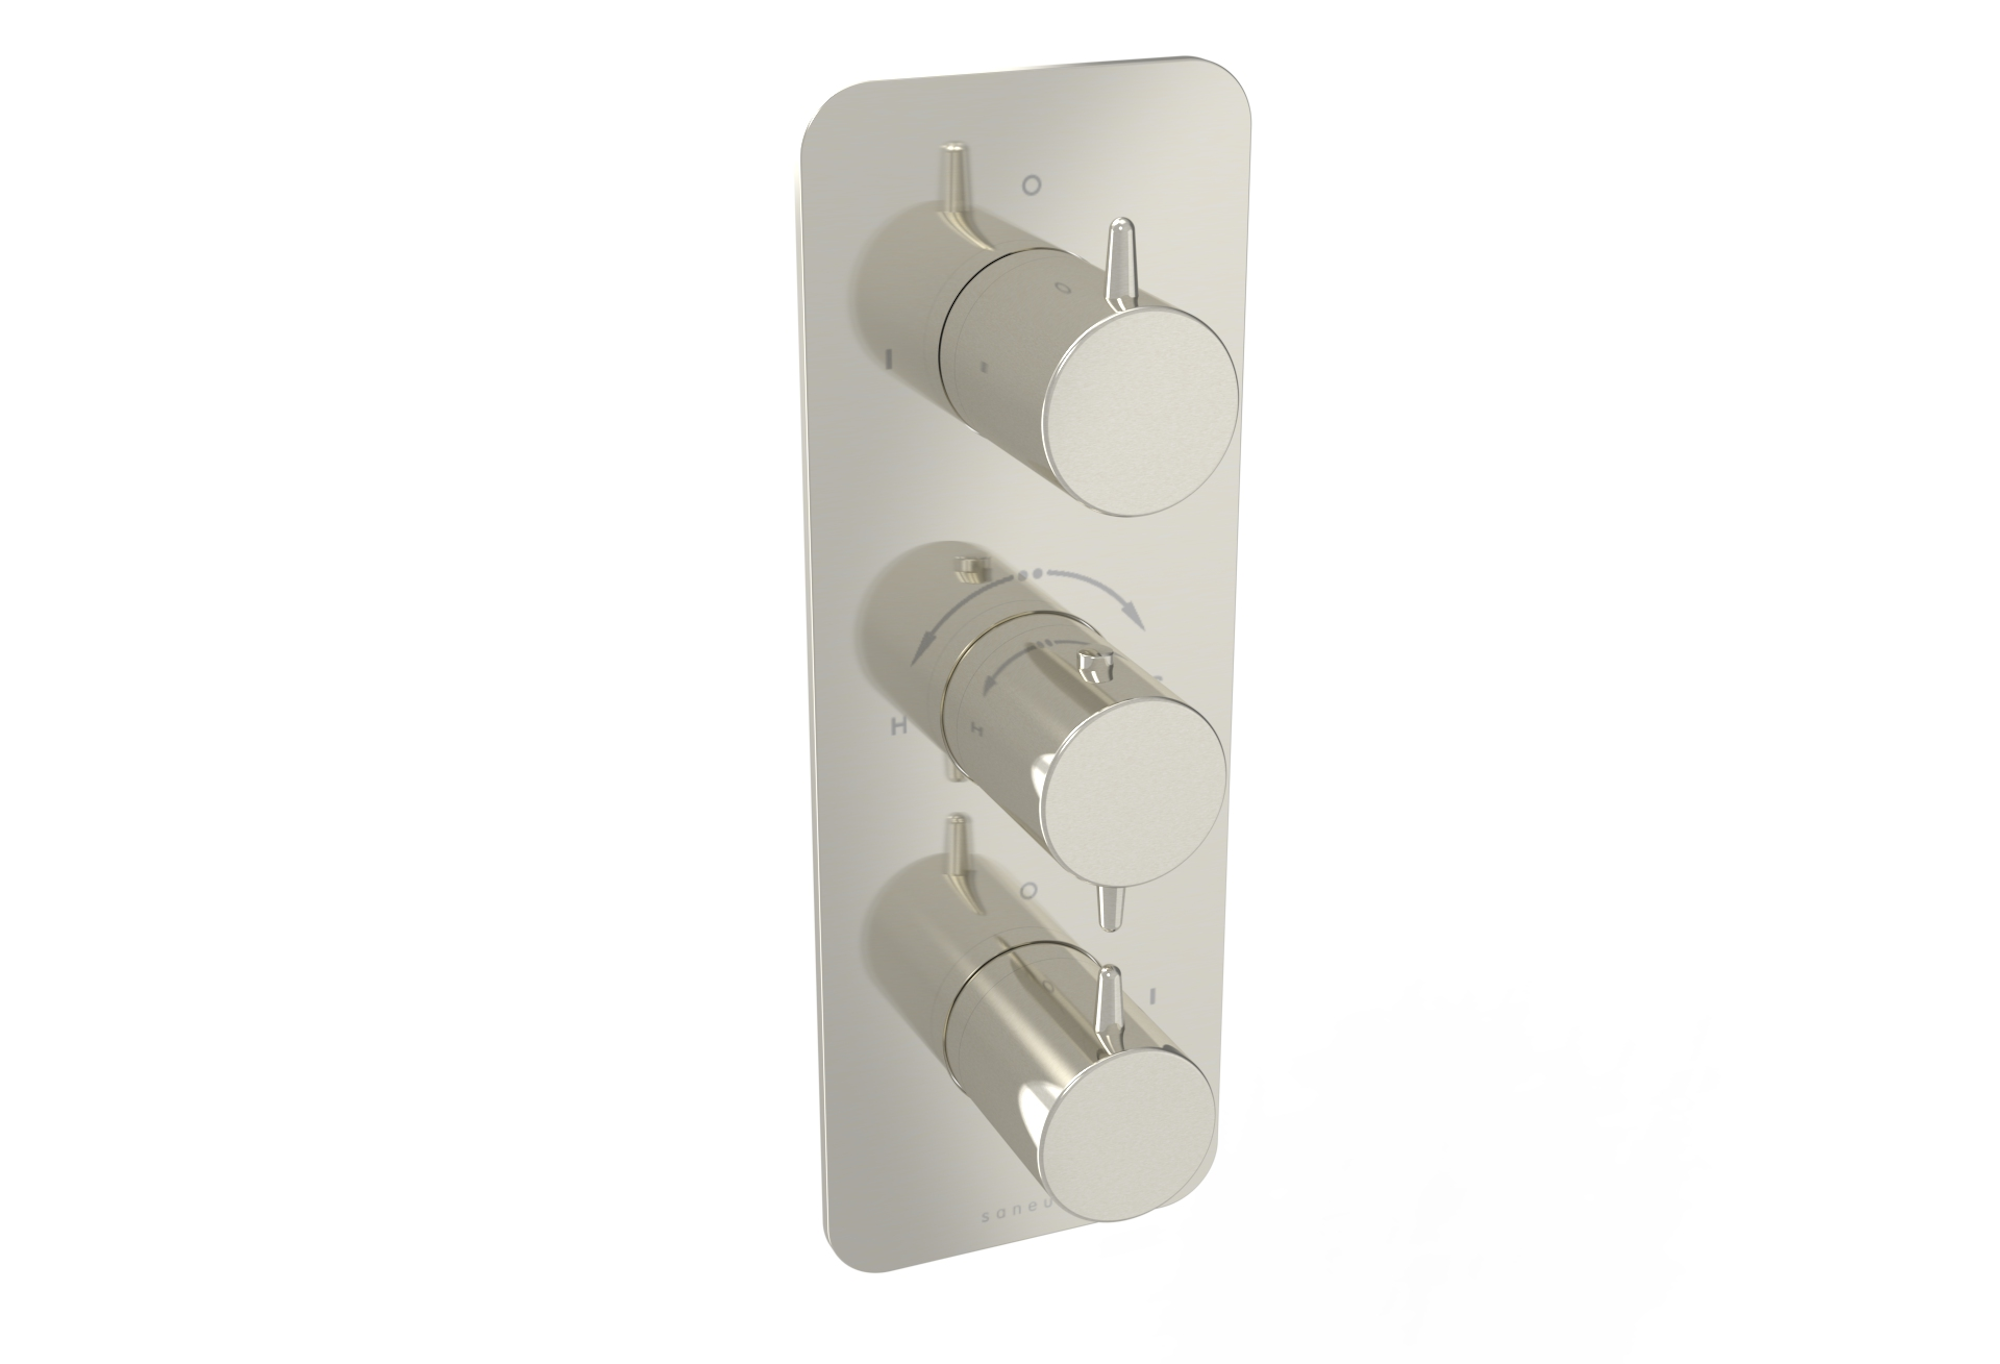 EDEN 3 way thermostatic shower valve kit in portrait - Brushed Nickel